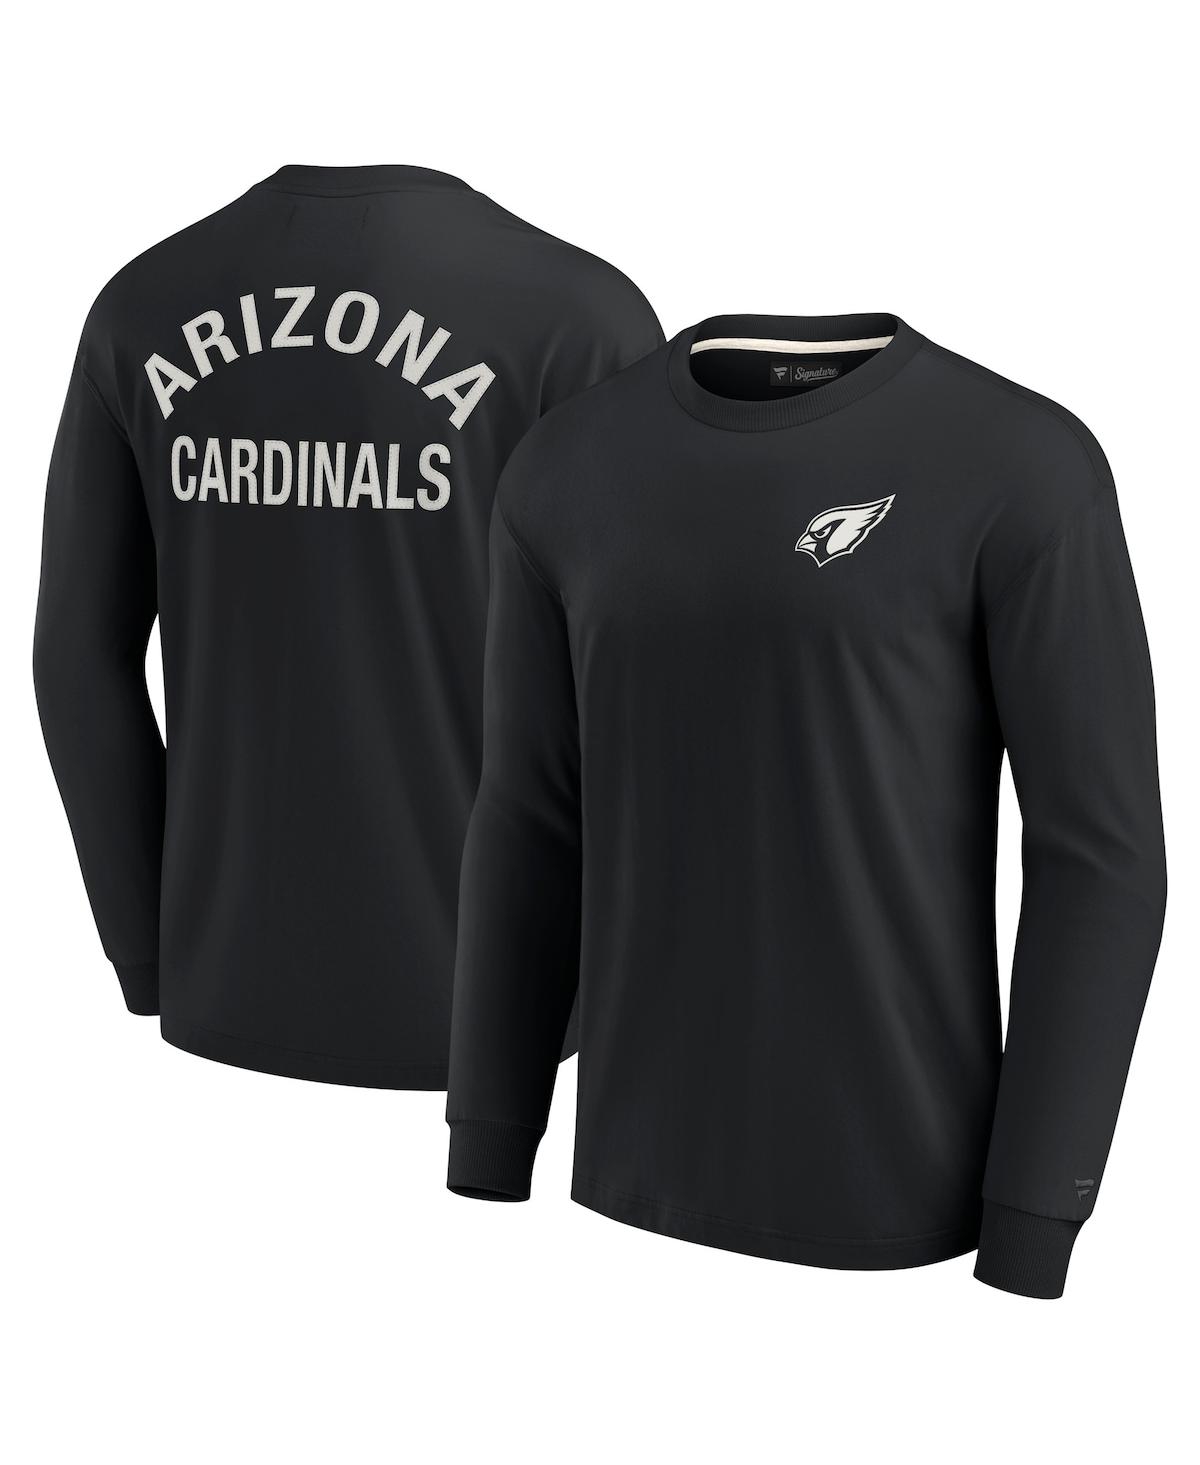 Men's and Women's Fanatics Signature Black Arizona Cardinals Super Soft Long Sleeve T-shirt - Black